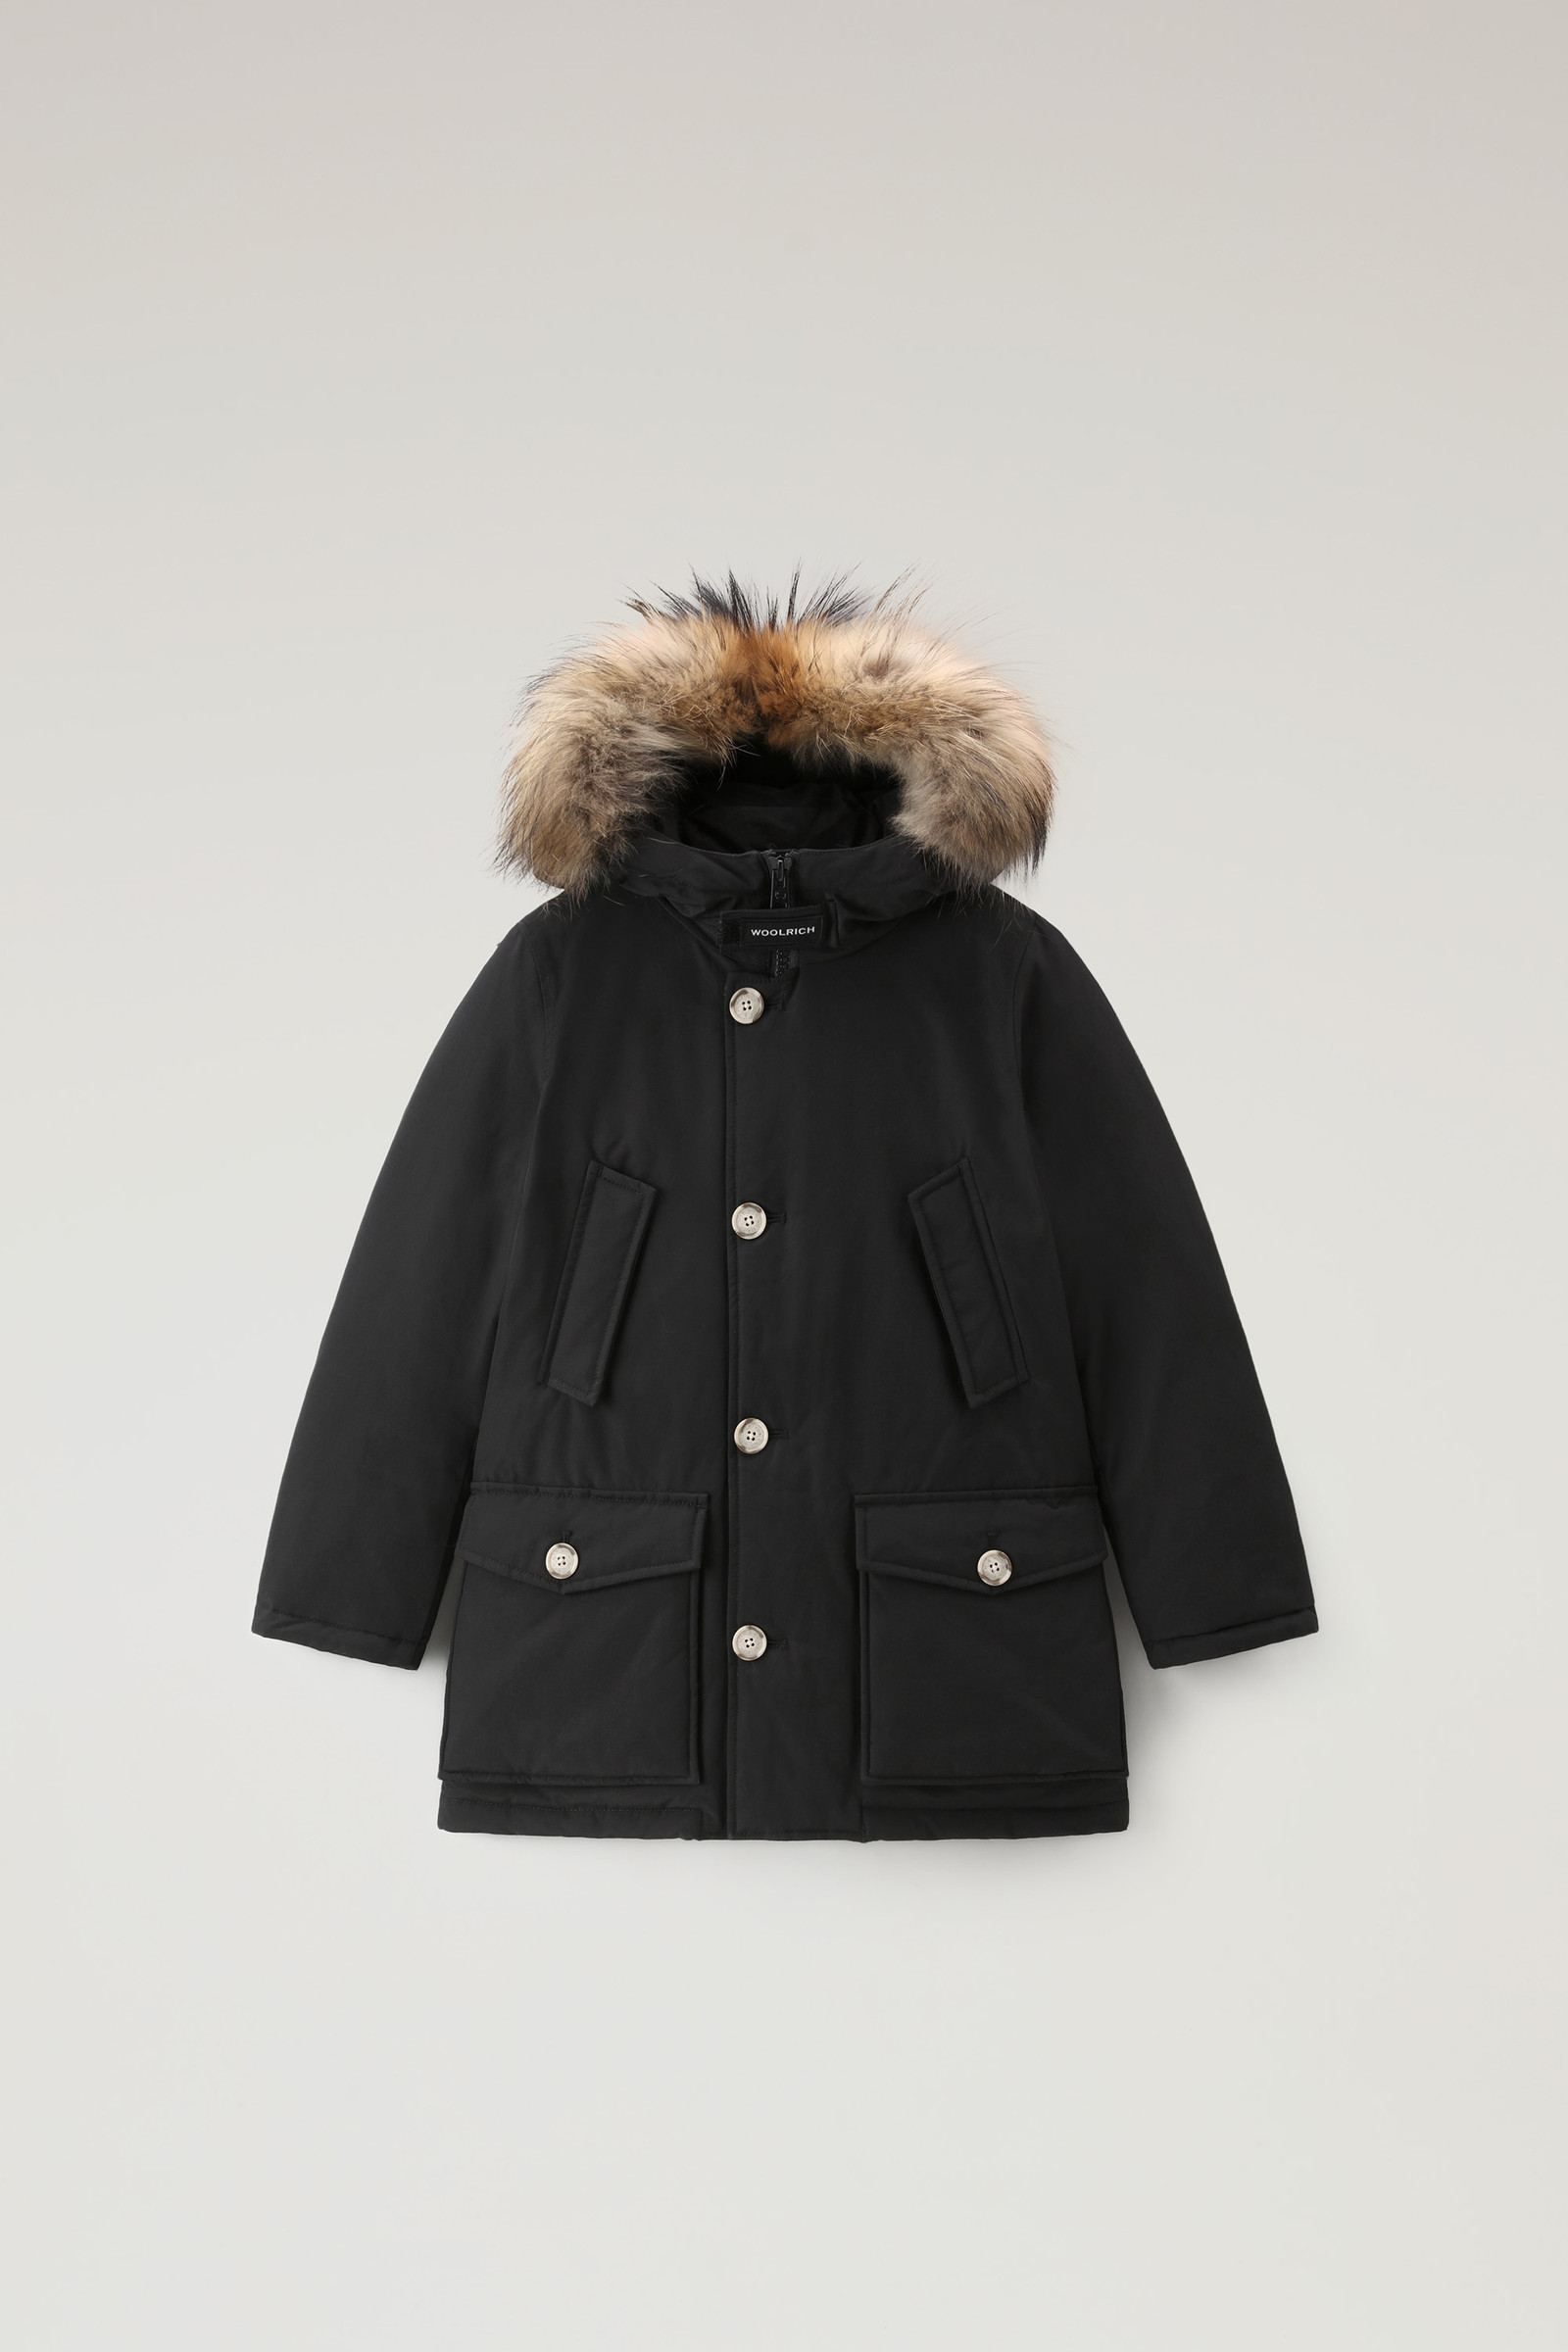 levering Vooruitzien Grof Boys' Arctic Parka with Detachable Fur Black | Woolrich UK